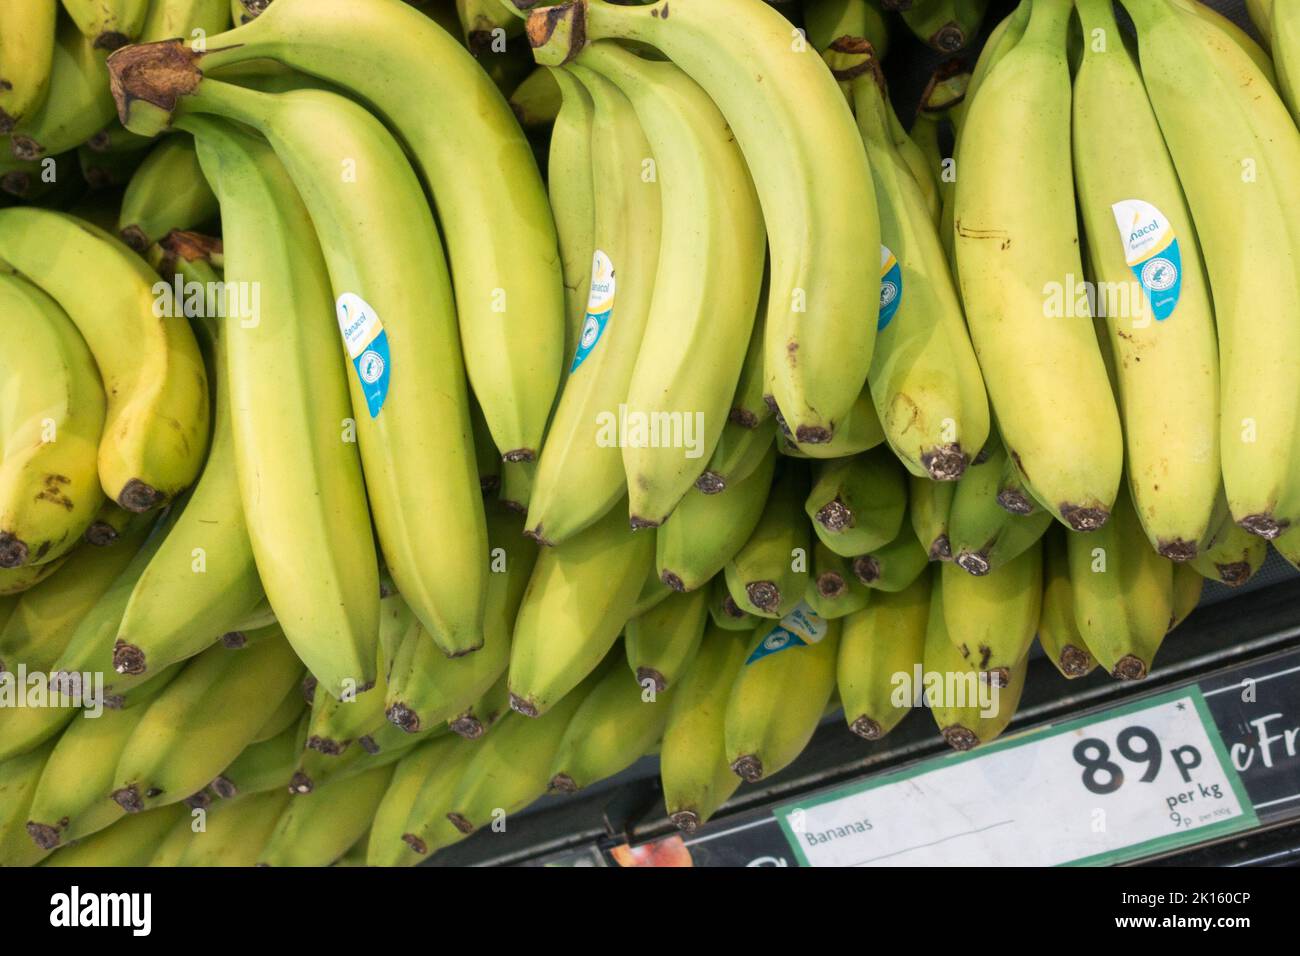 Green banana bunch in Supermarket shelf Stock Photo